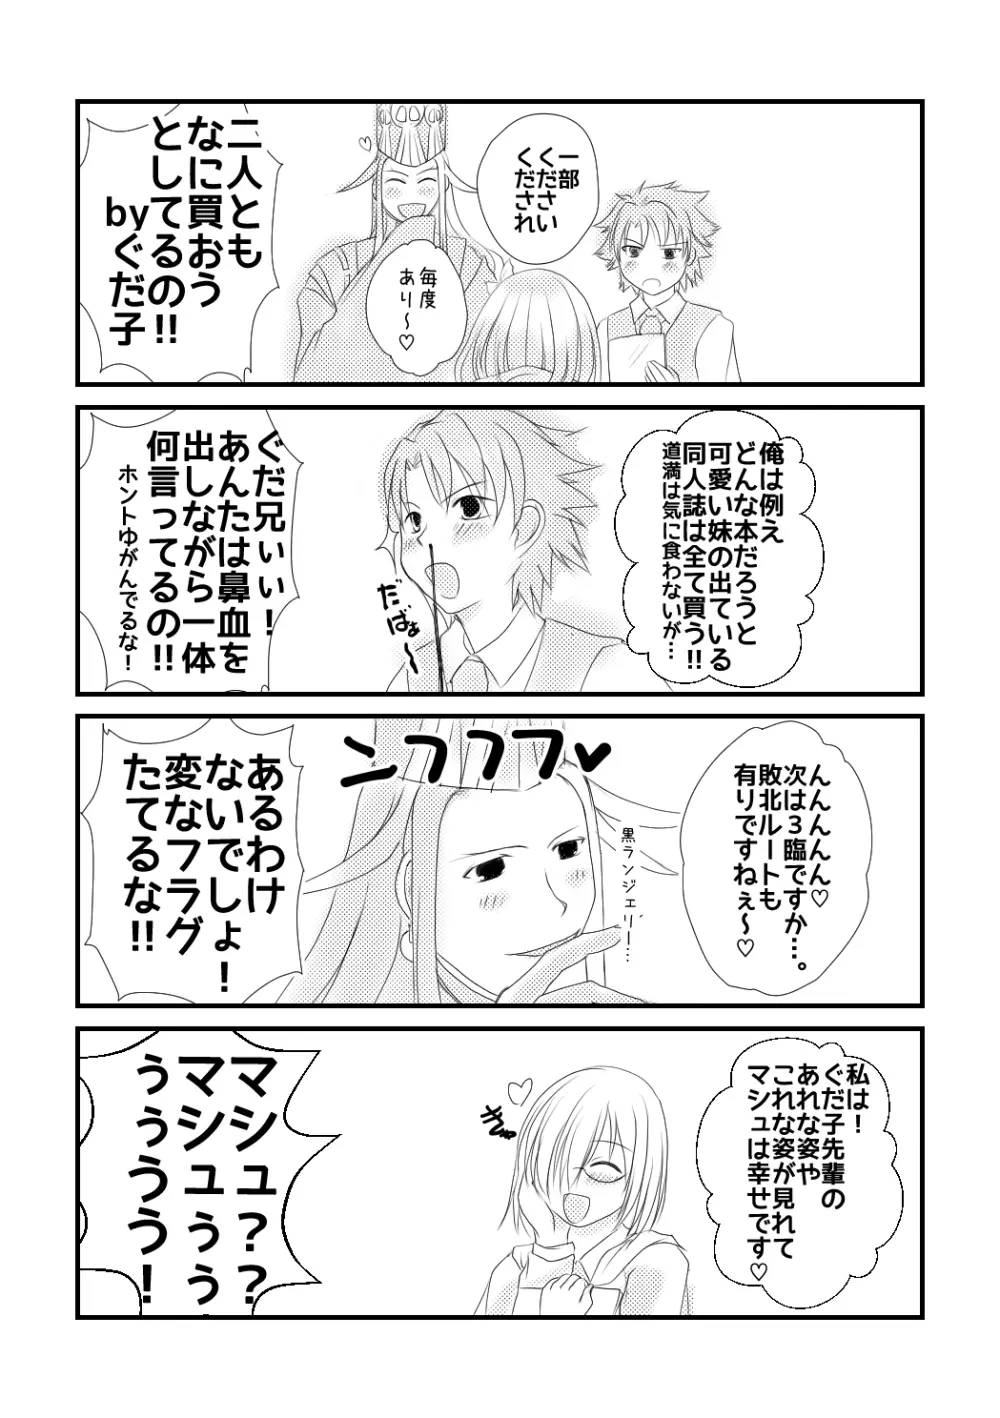 ] Rin guda ♀ rakugaki guda yuru manga(Fate/Grand Order] Page.7